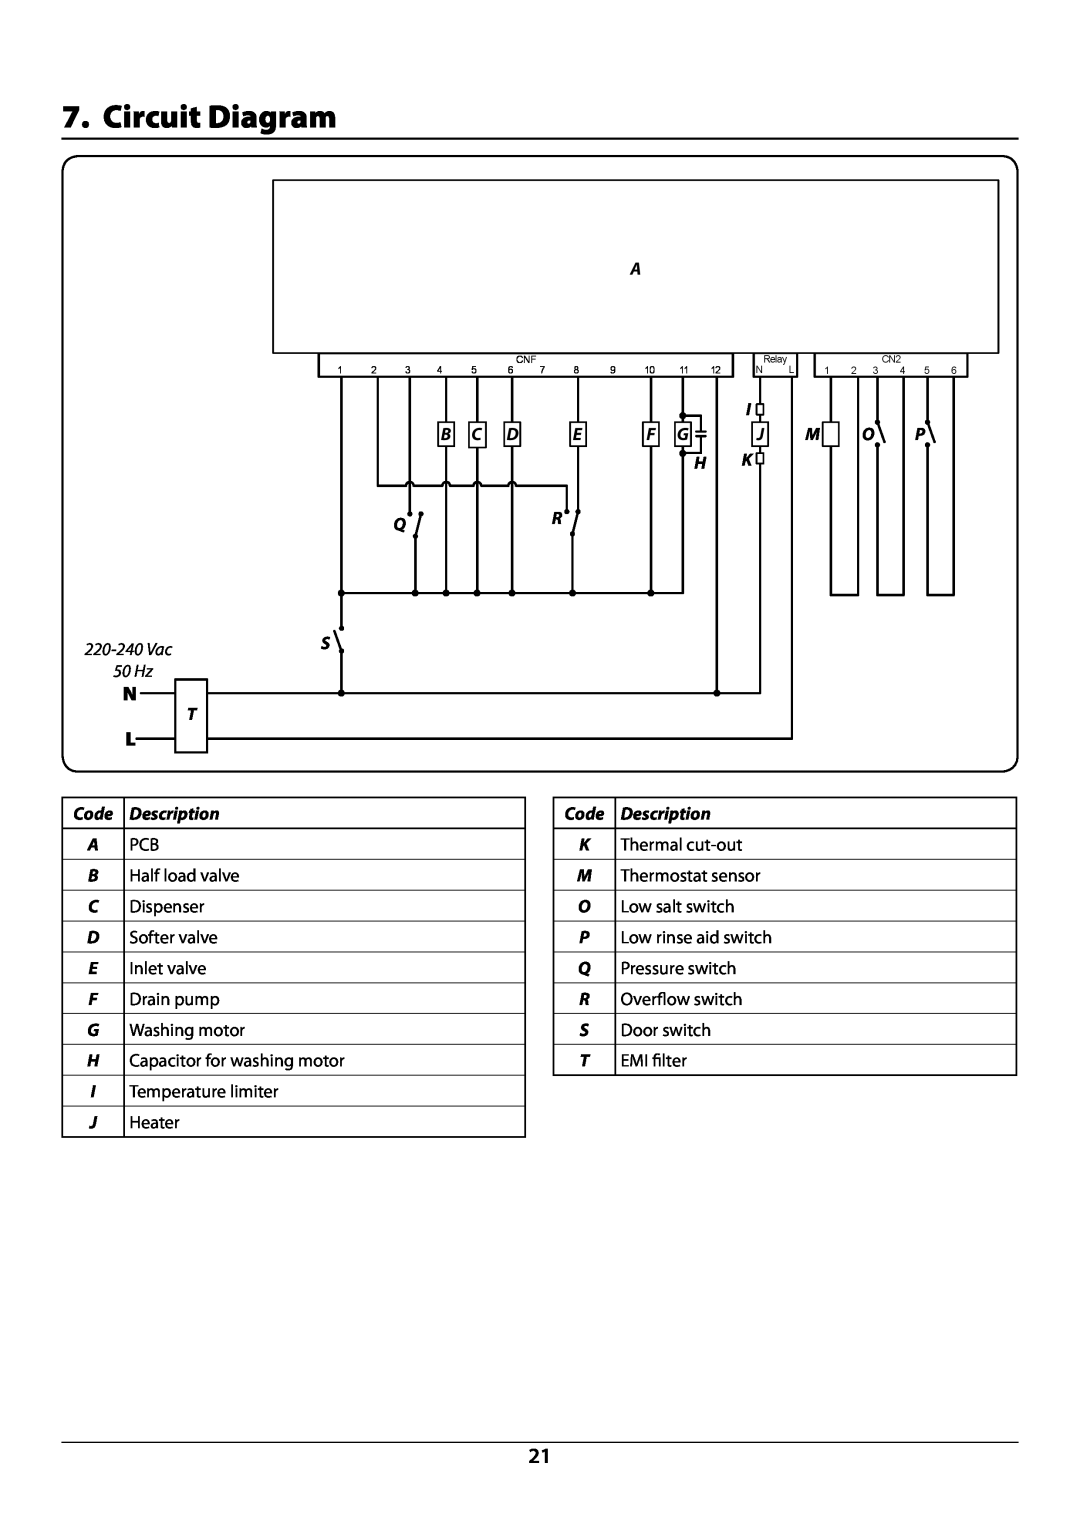 Rangemaster RDW459FI/SF manual Circuit Diagram, B C D, F G, M O P, Vac 50 Hz, Code, Description 